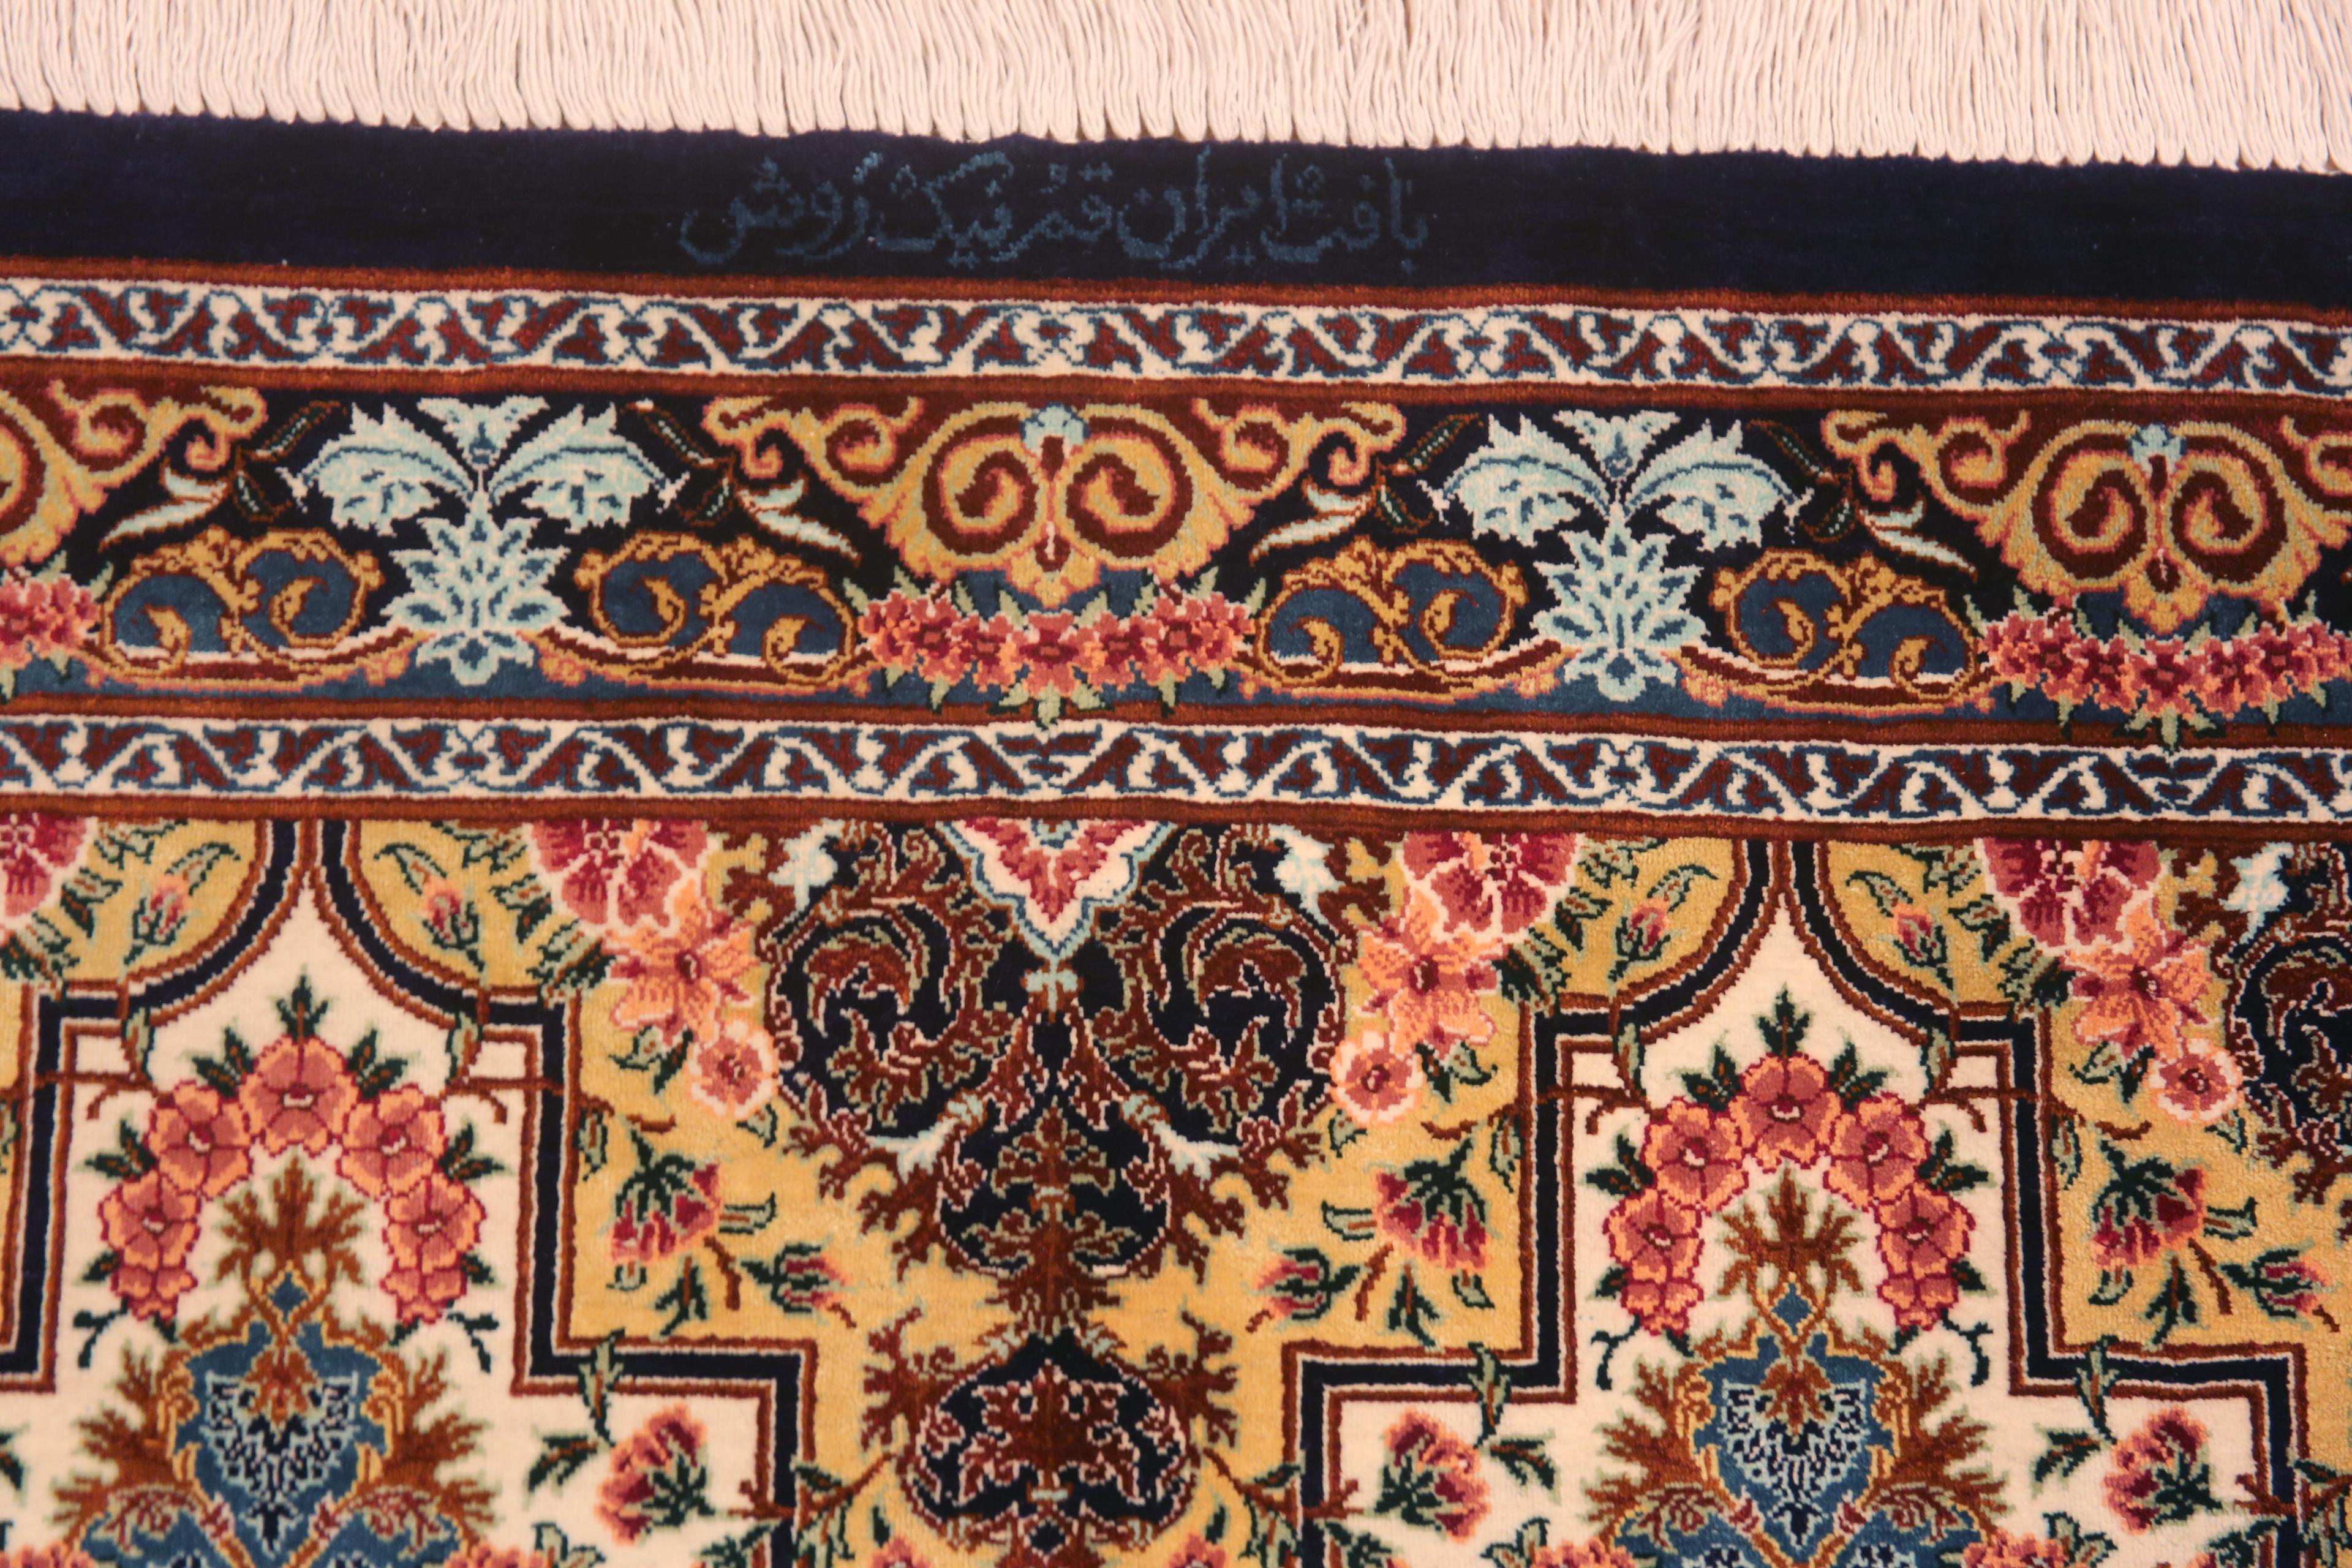 Intricate Fine Luxurious Persian Qum Silk Hallway Runner Rug 2'7